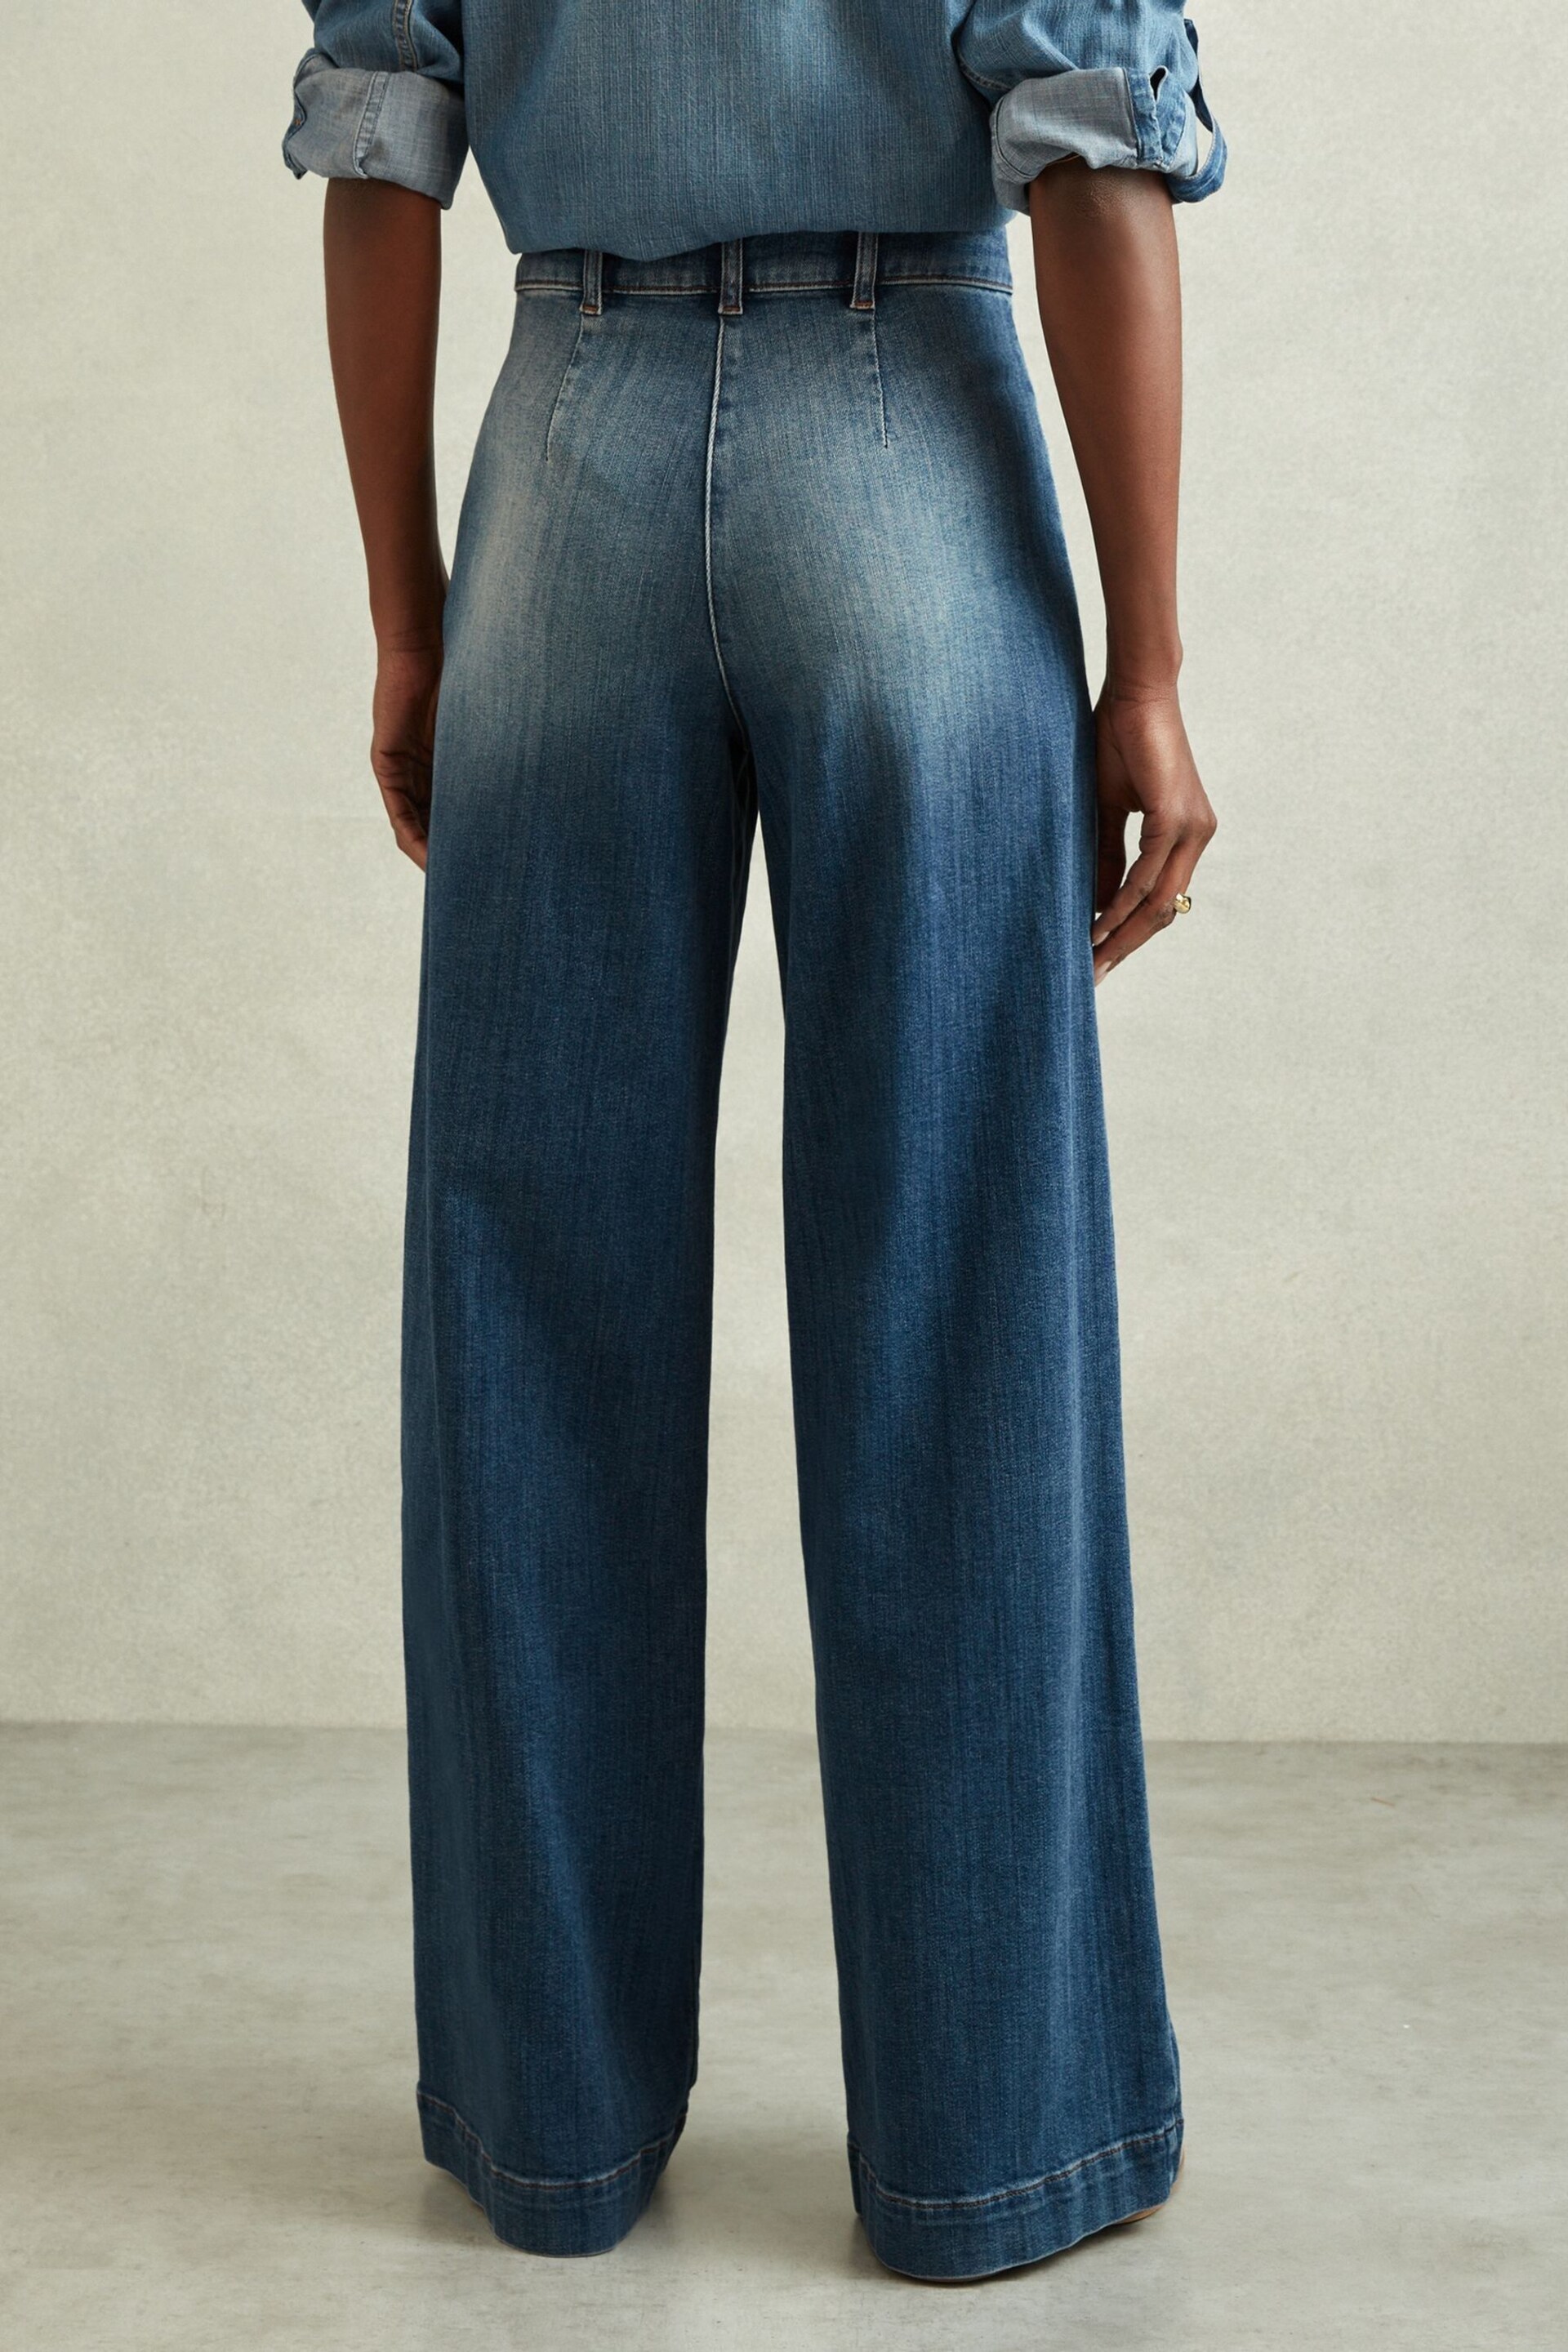 Reiss Mid Blue Kira Petite Front Pocket Wide Leg Jeans - Image 5 of 7